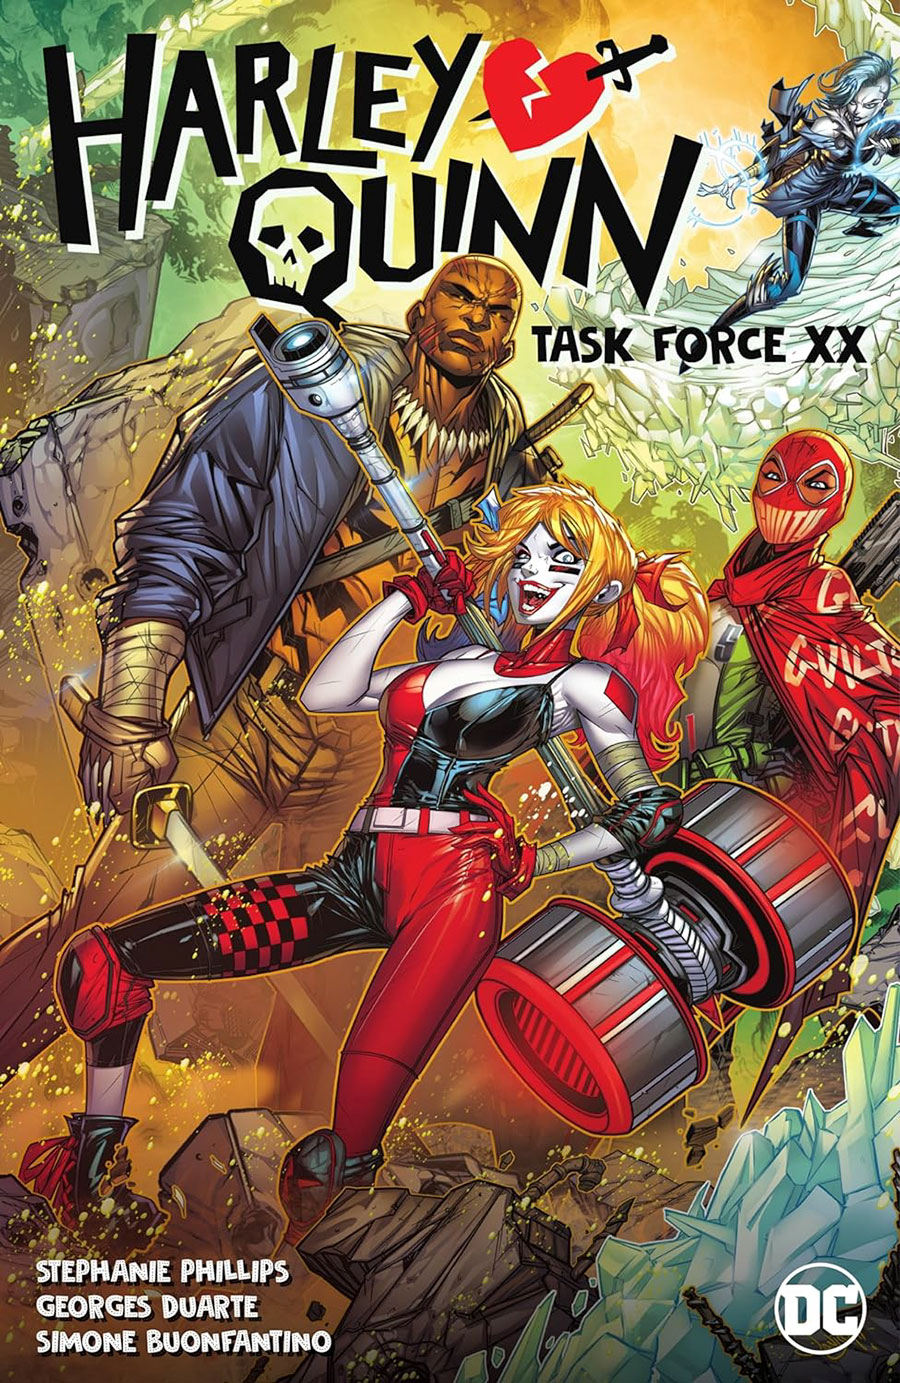 Harley Quinn (2021) Vol 4 Task Force XX HC